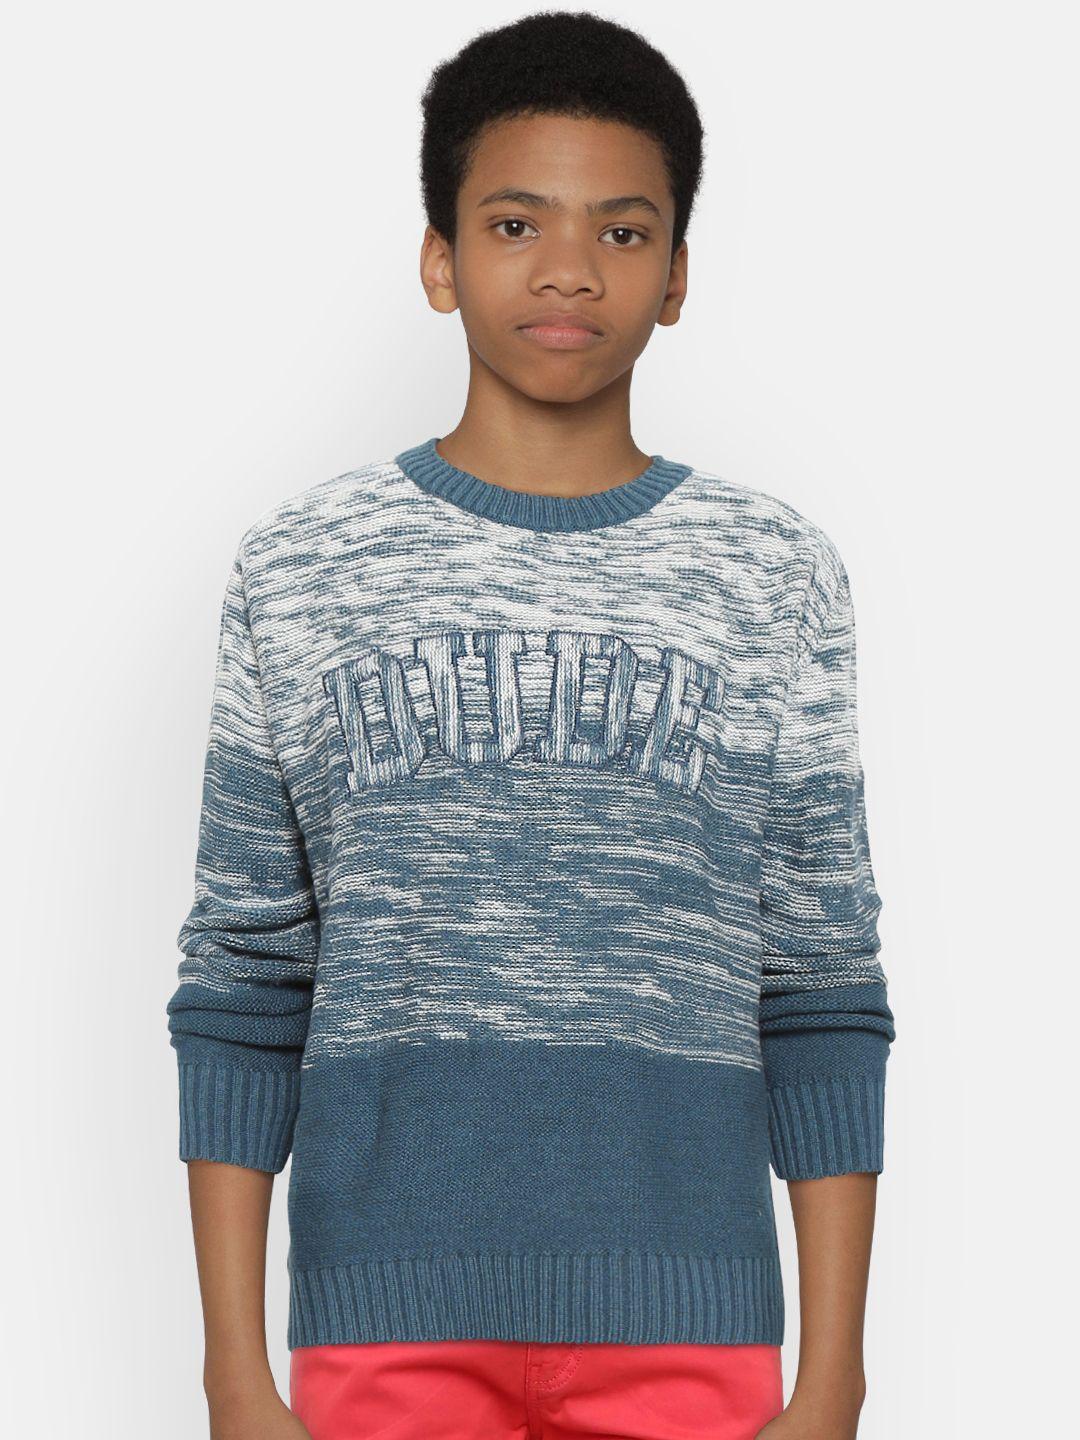 wingsfield boys blue & white self design sweater